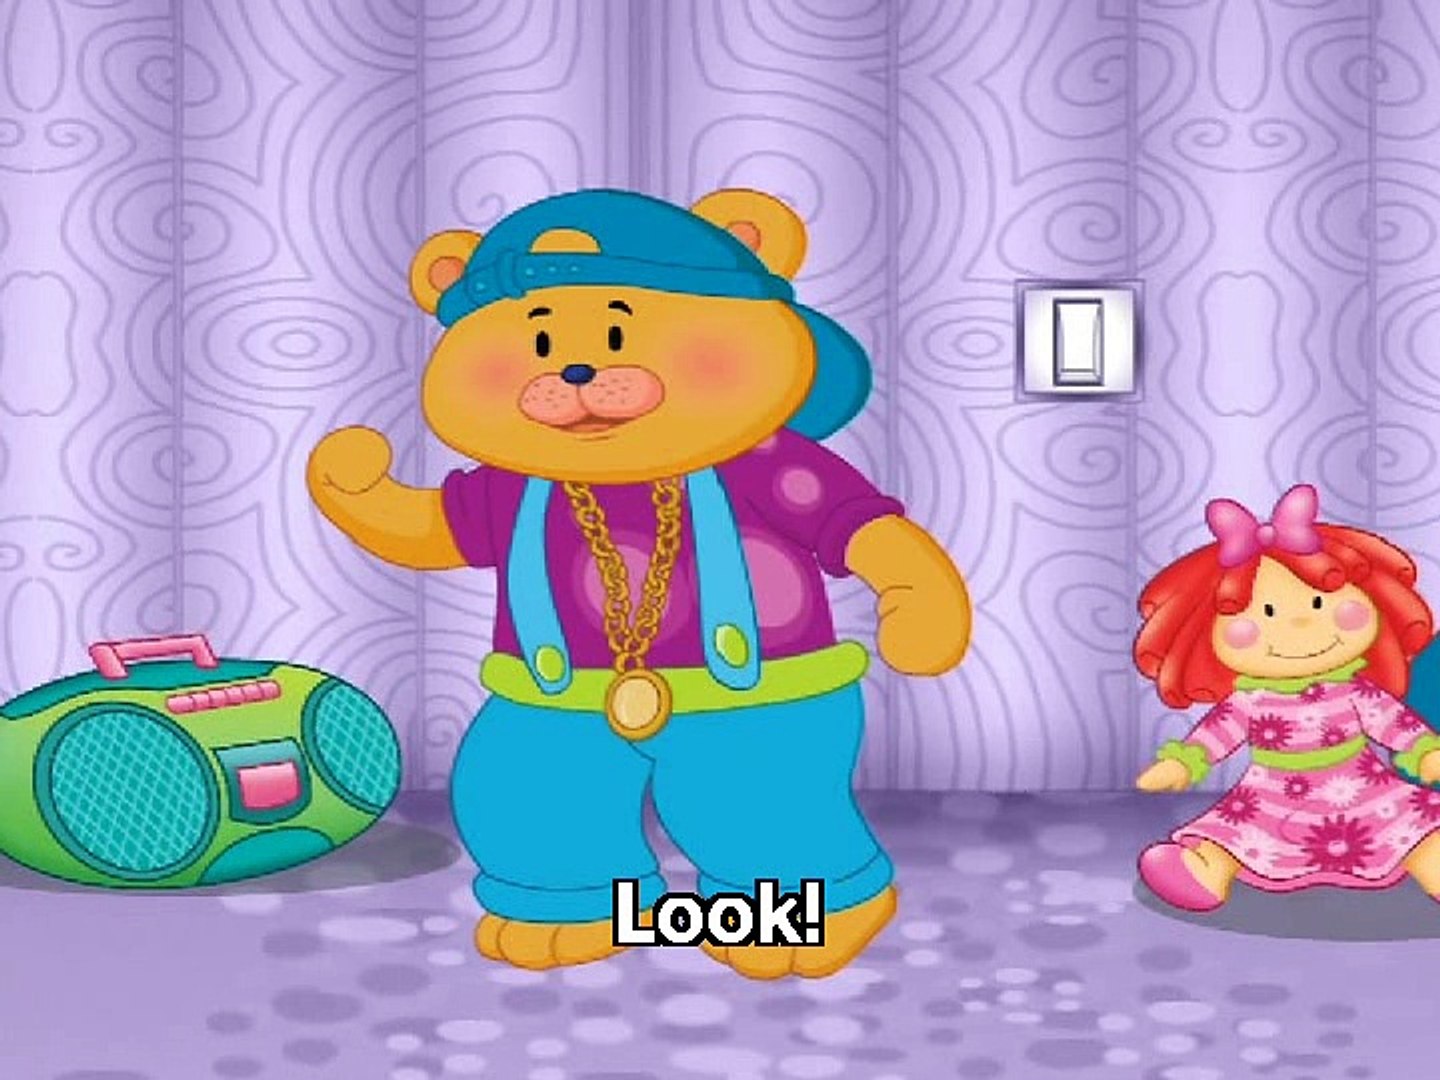 Teddy Bear Teddy Bear lyric